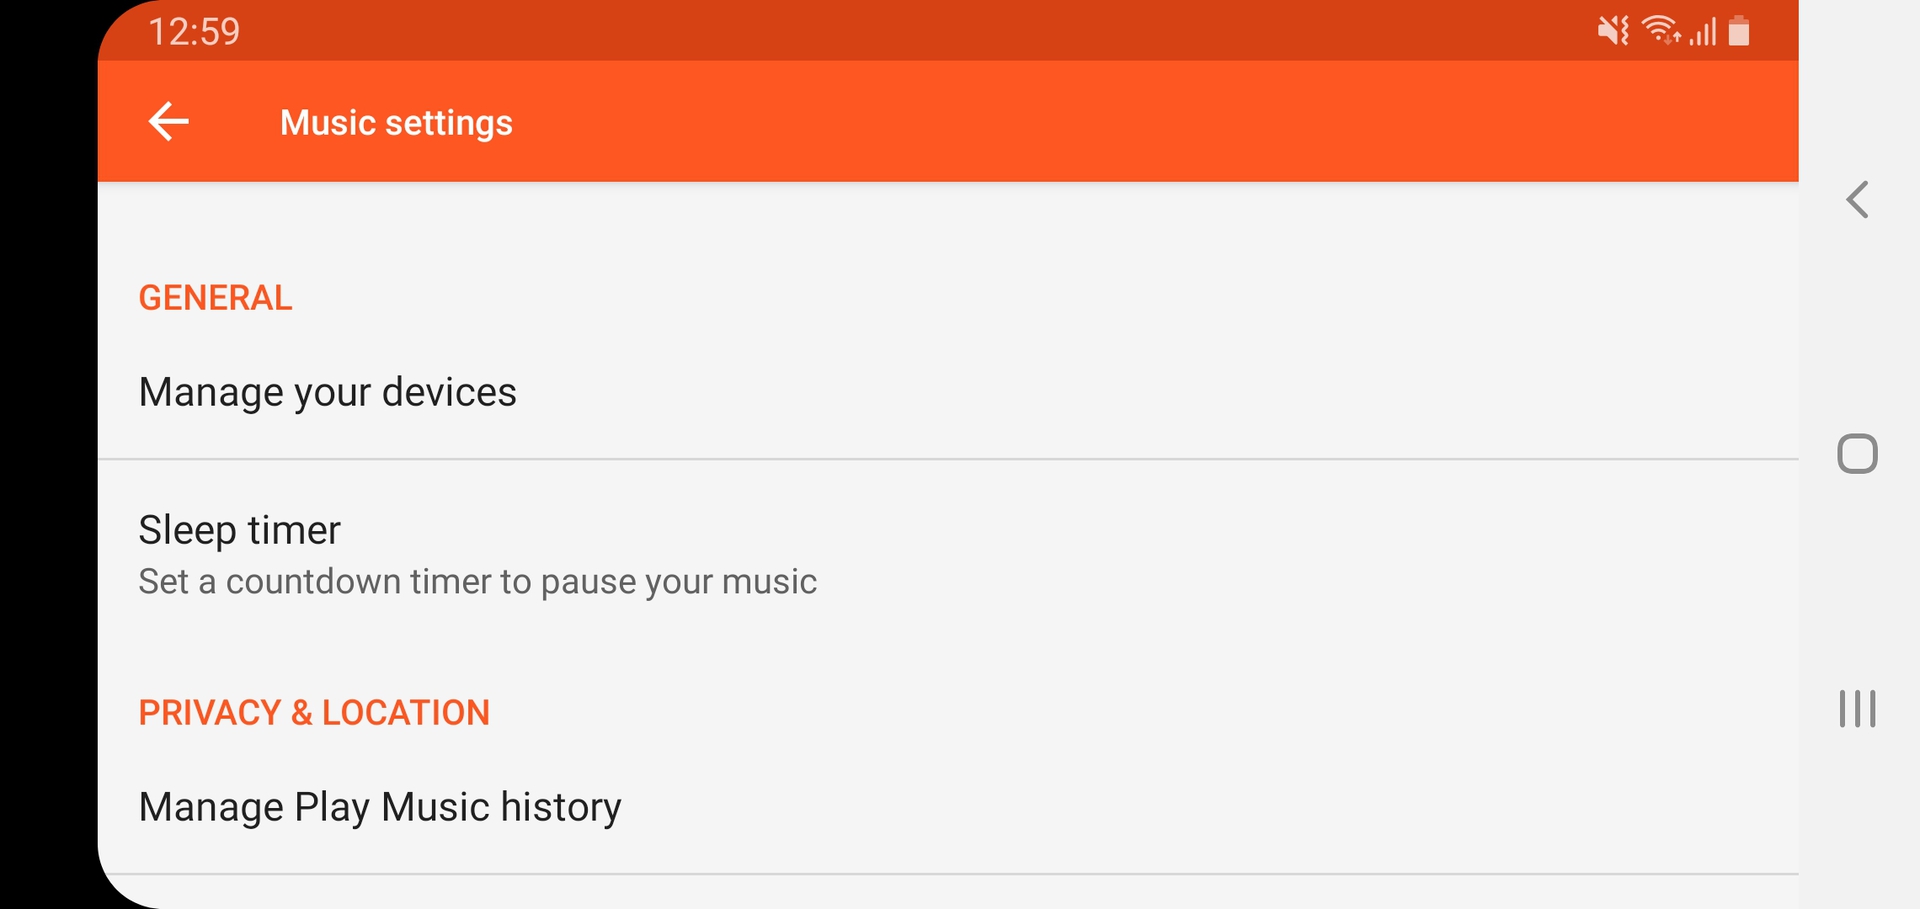 Google Play Music 8.21 verion settigs